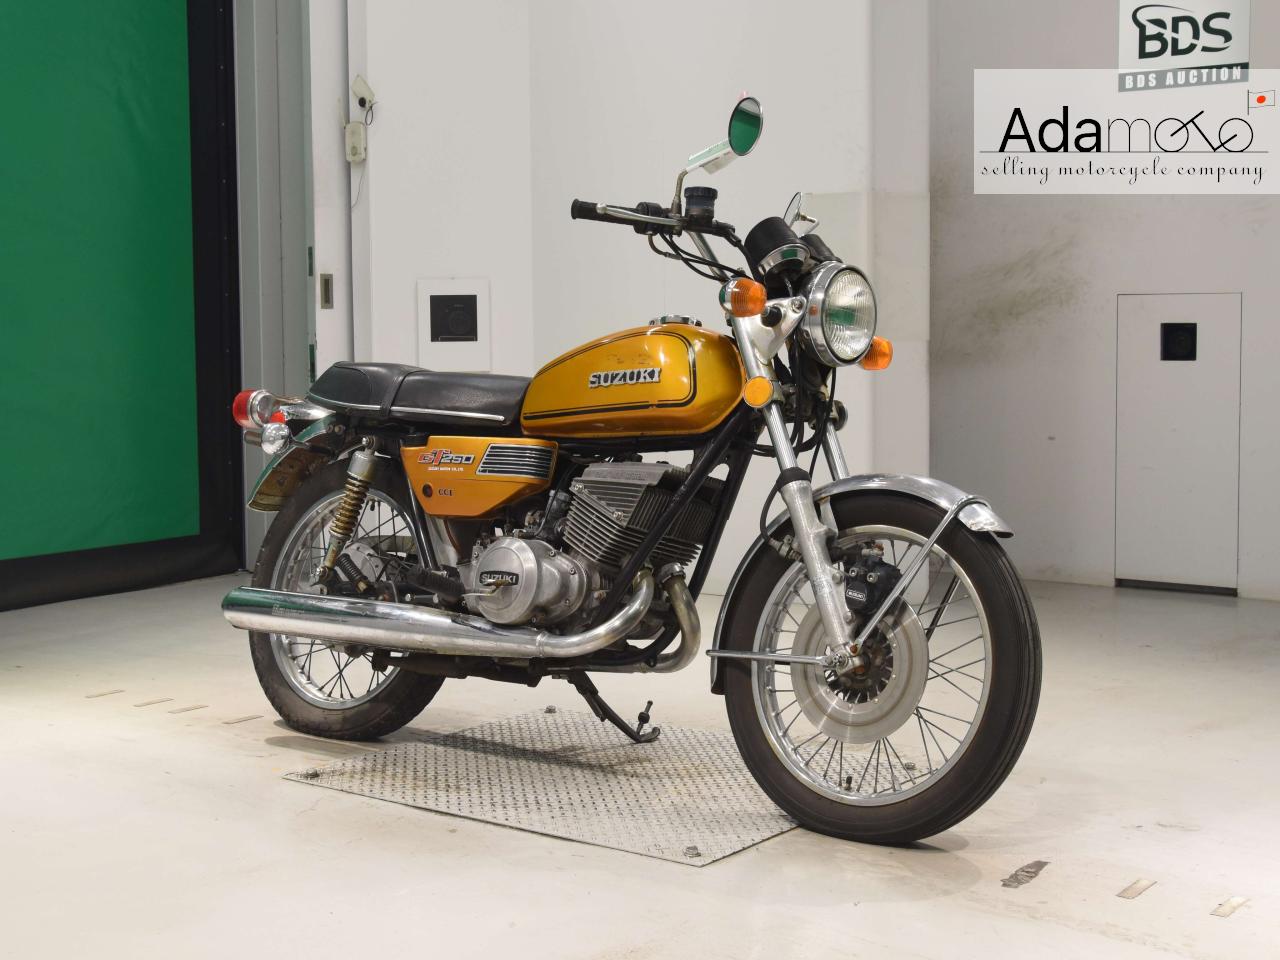 Suzuki GT250 - Adamoto - Motorcycles from Japan